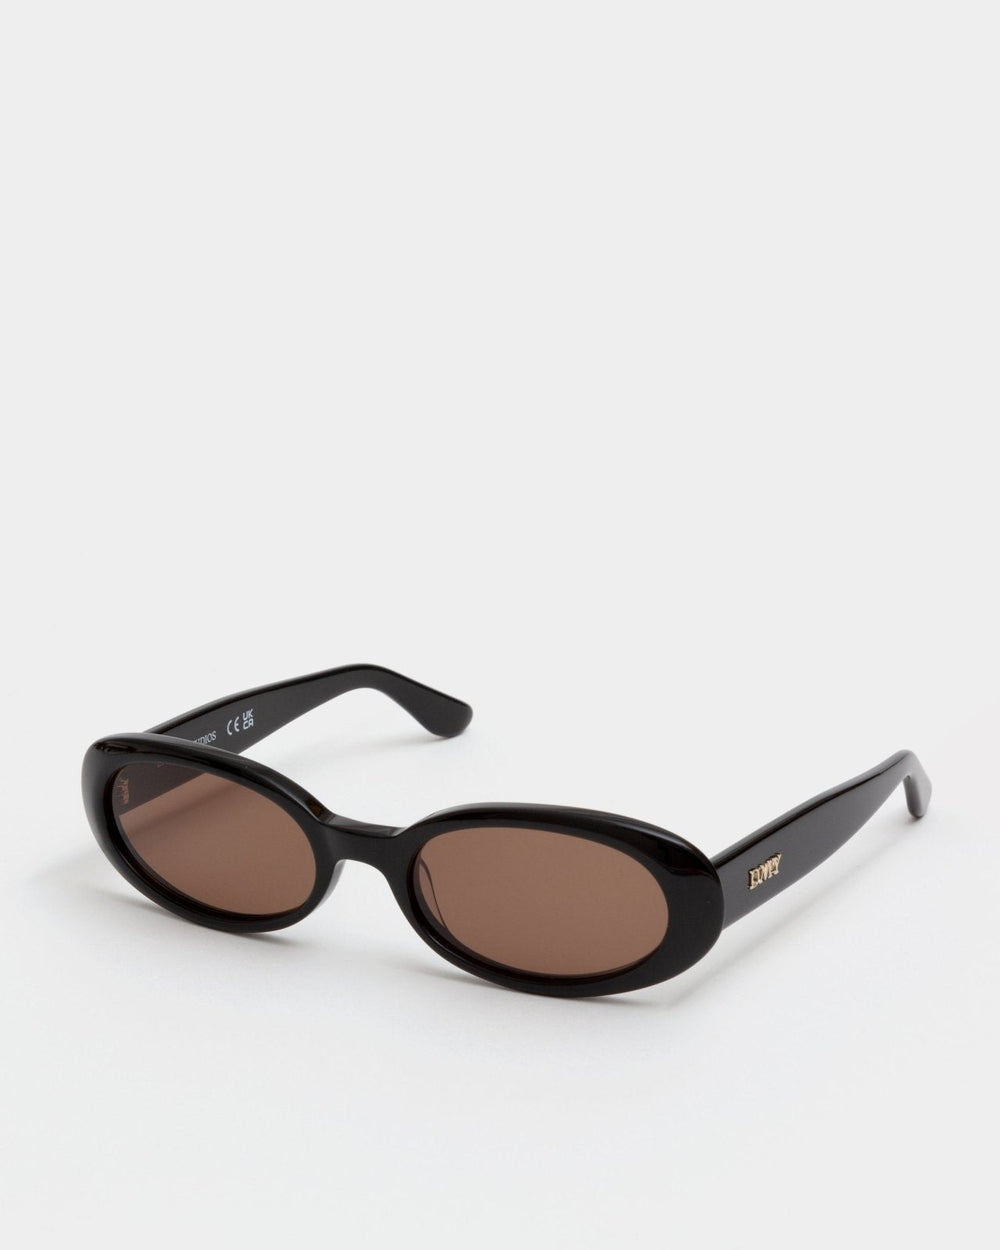 Valentina Black Sunglasses